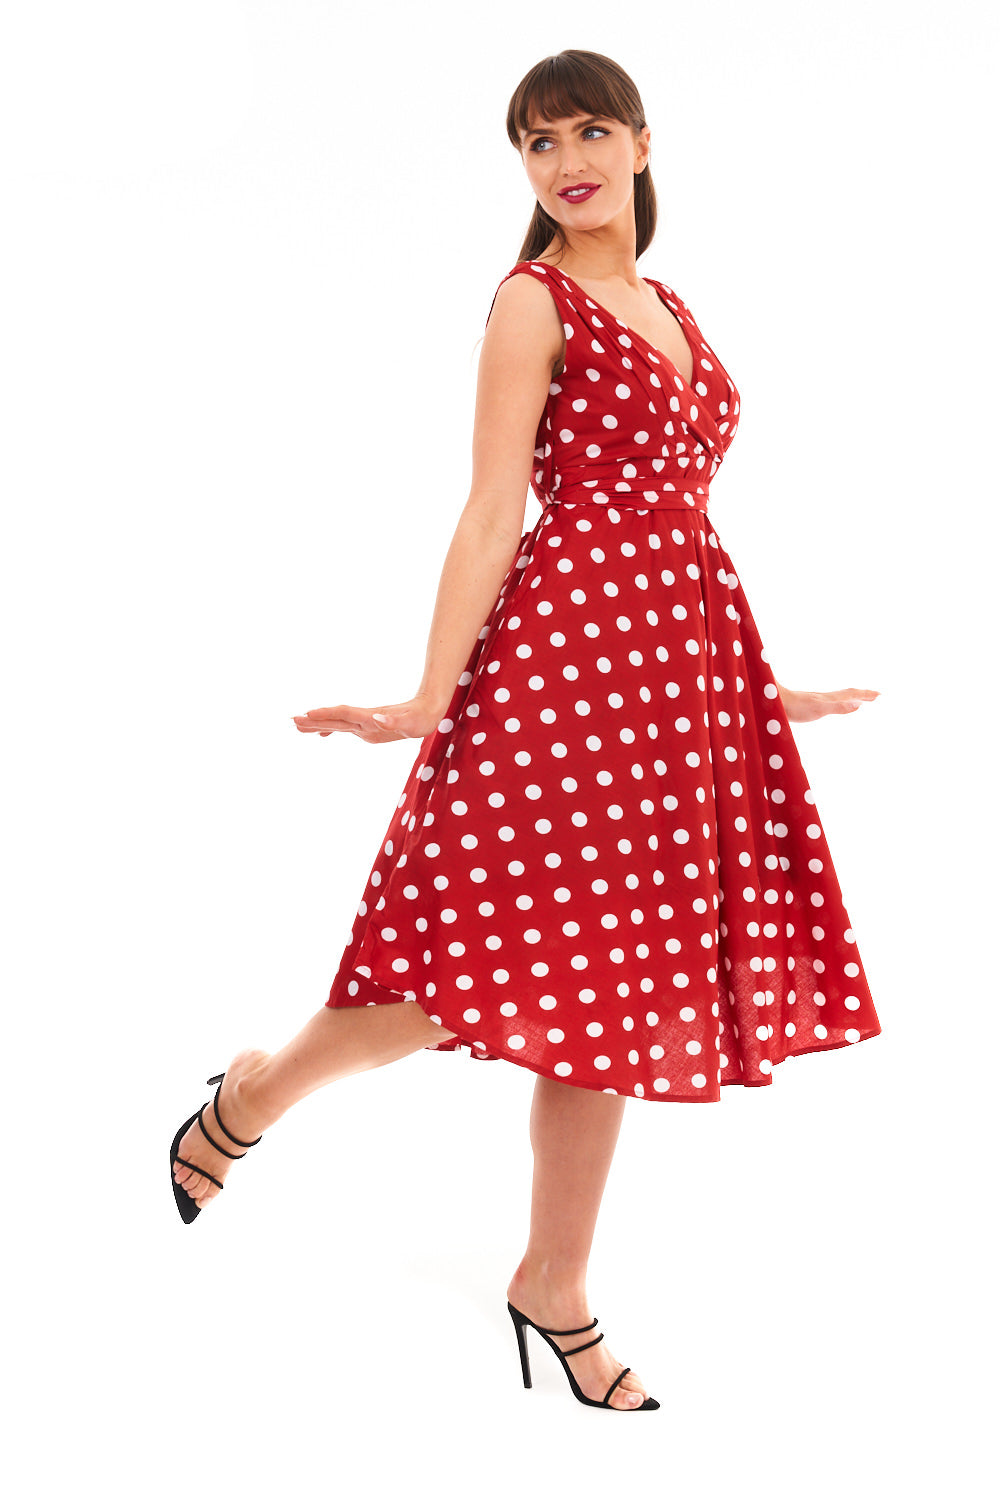 Ladies Retro Vintage 1950's Rockabilly Swing Polka Dot Dress in Red